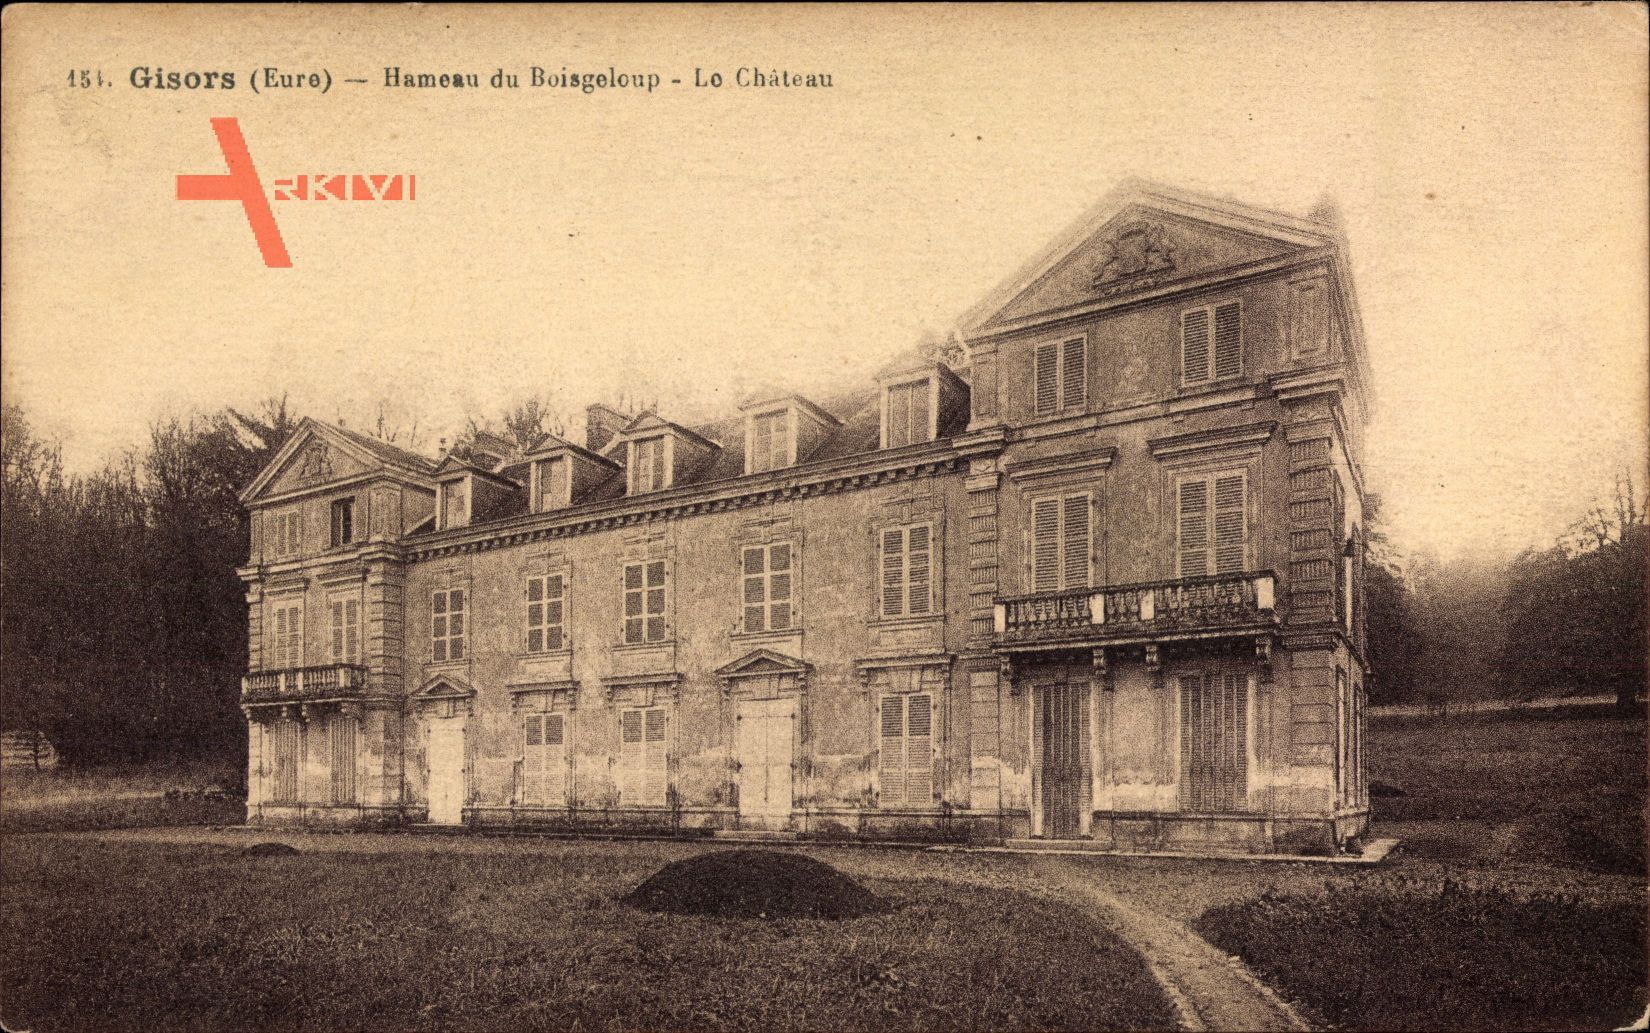 Gisors Eure, Hameau du Boisgeloup, le Chateau, Blick auf das Schloss